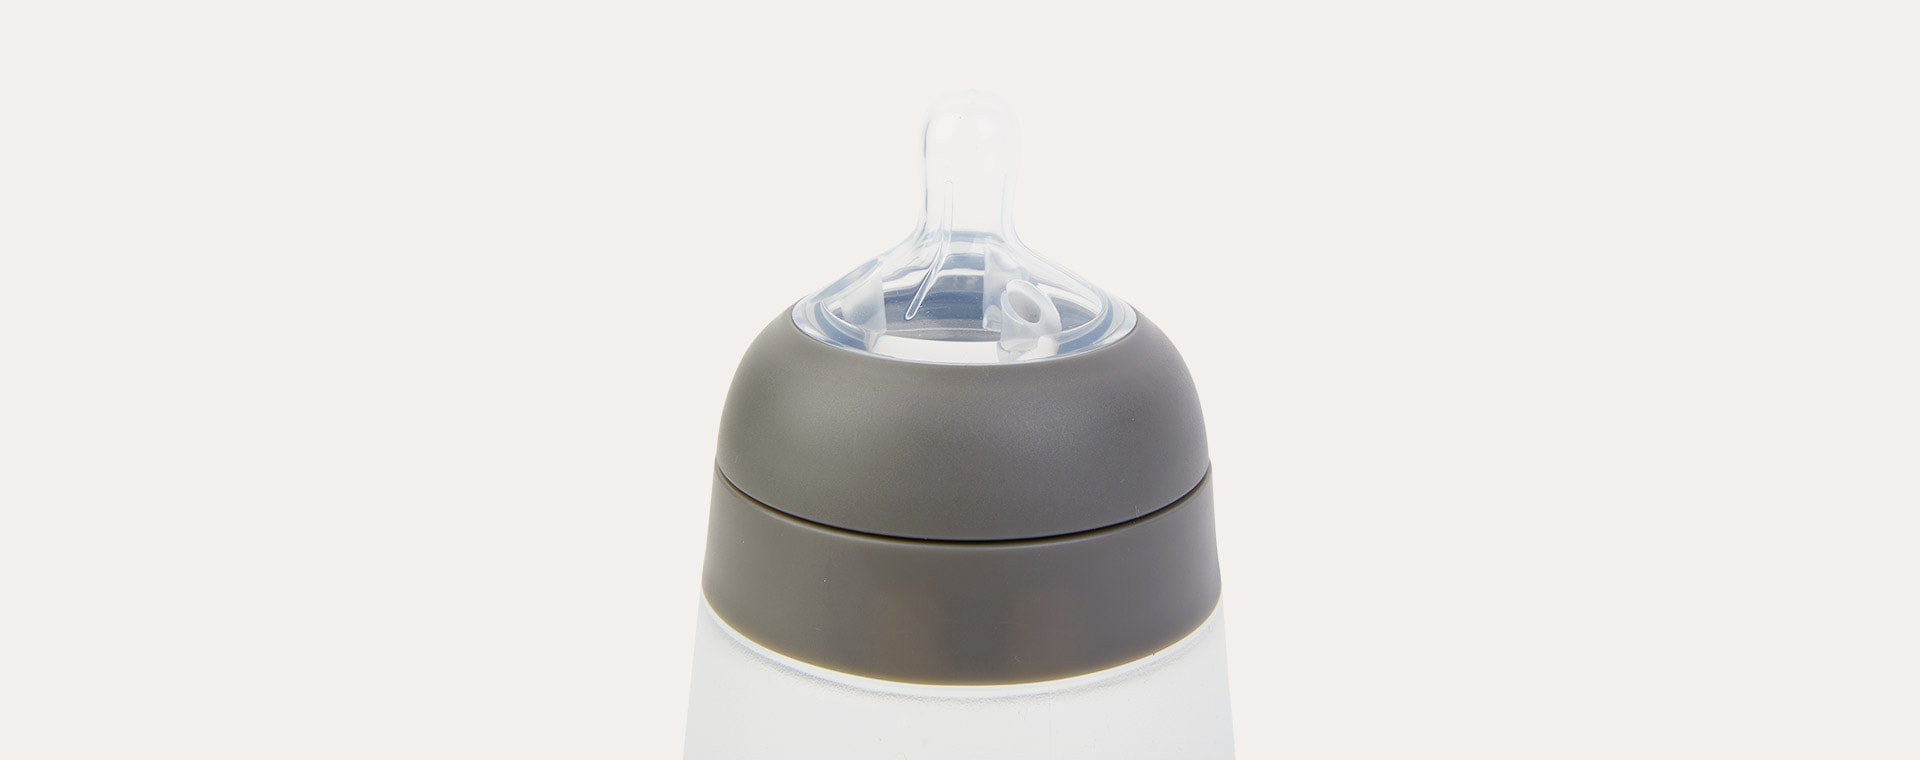 Grey nanobébé 2-Pack Flexy Silicone Baby Bottles